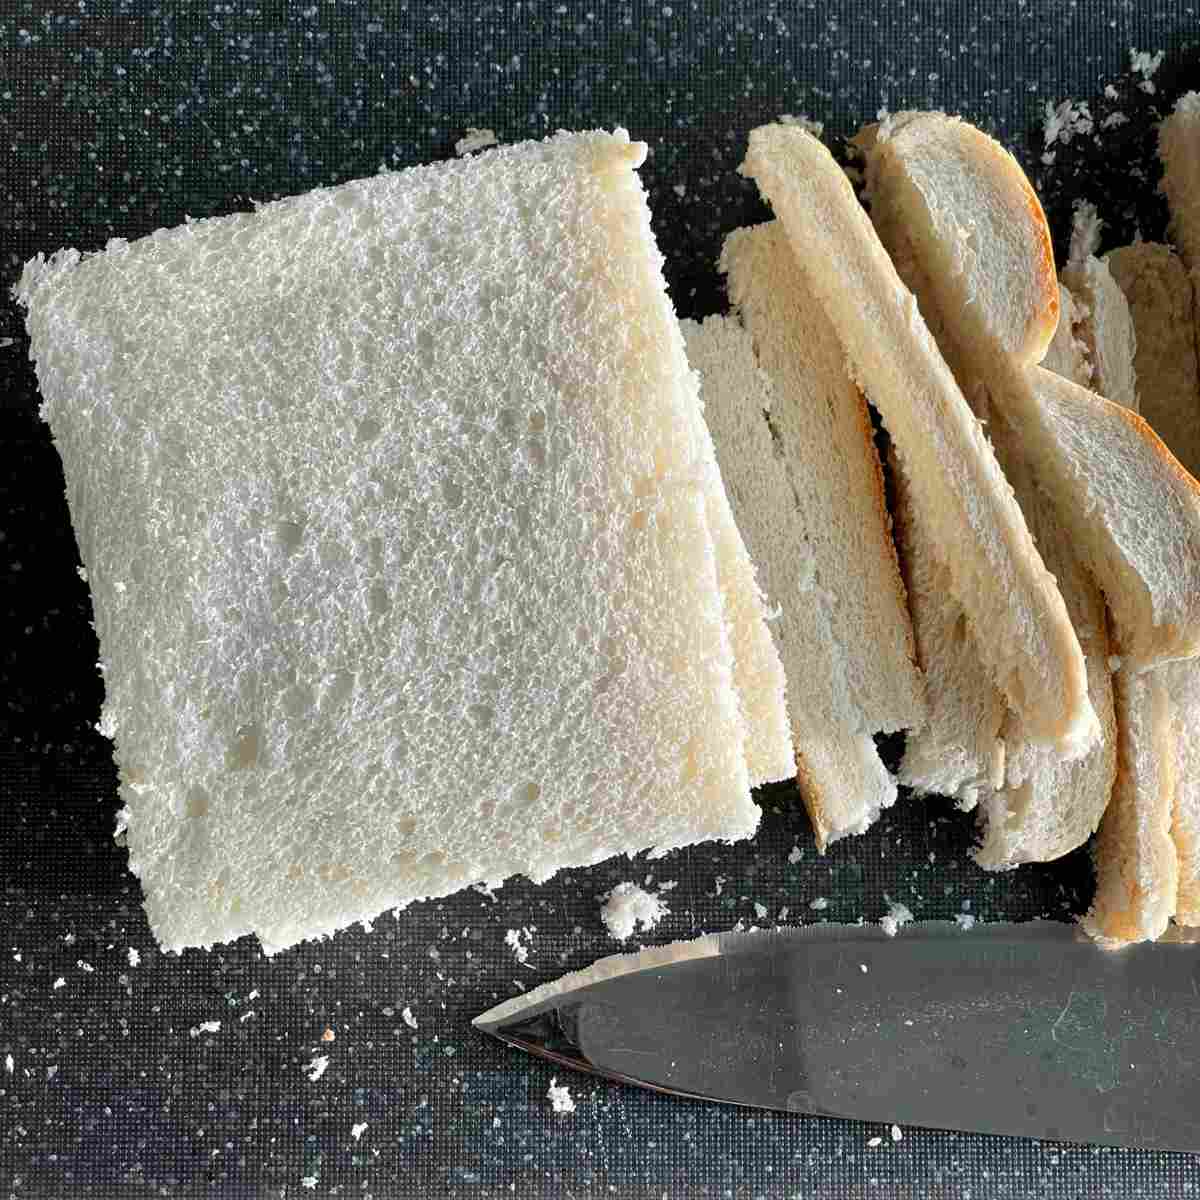 White bread crust trimmed